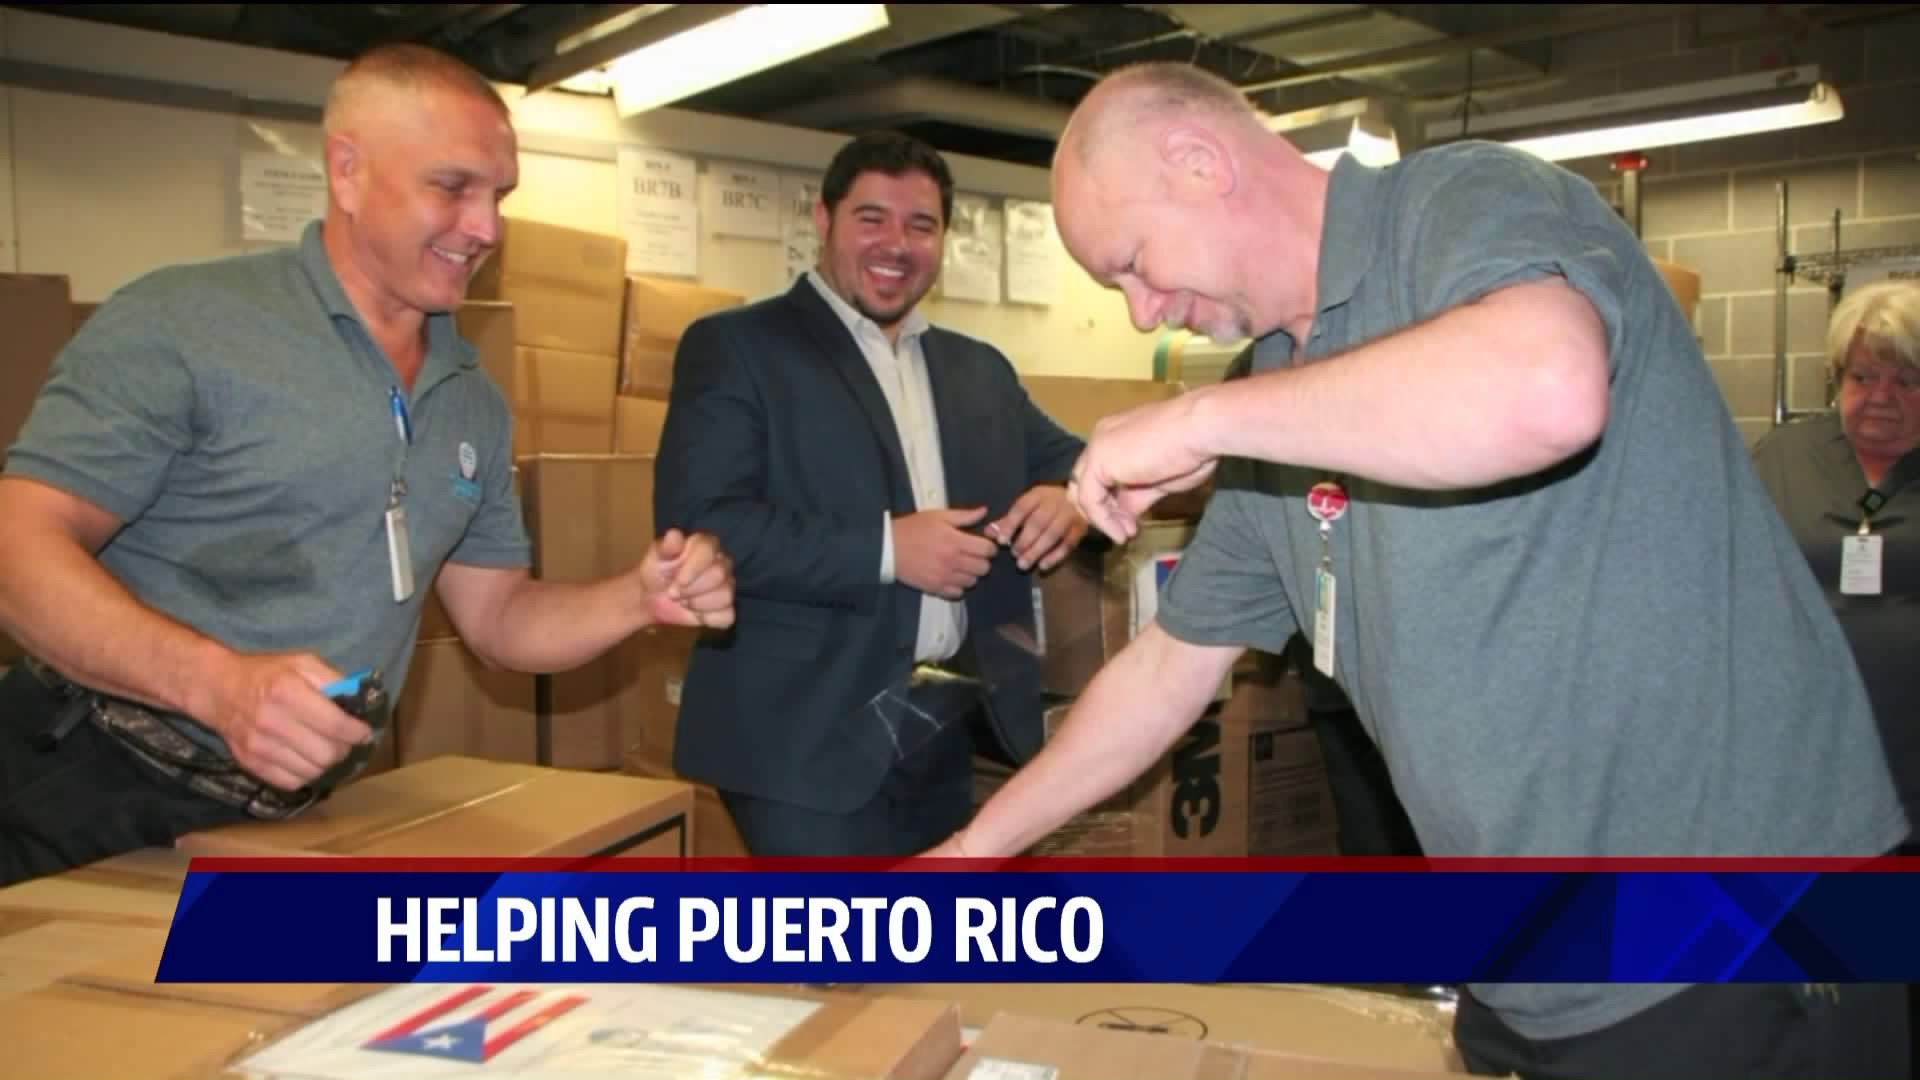 Puerto Rico relief efforts both rewarding and frustrating